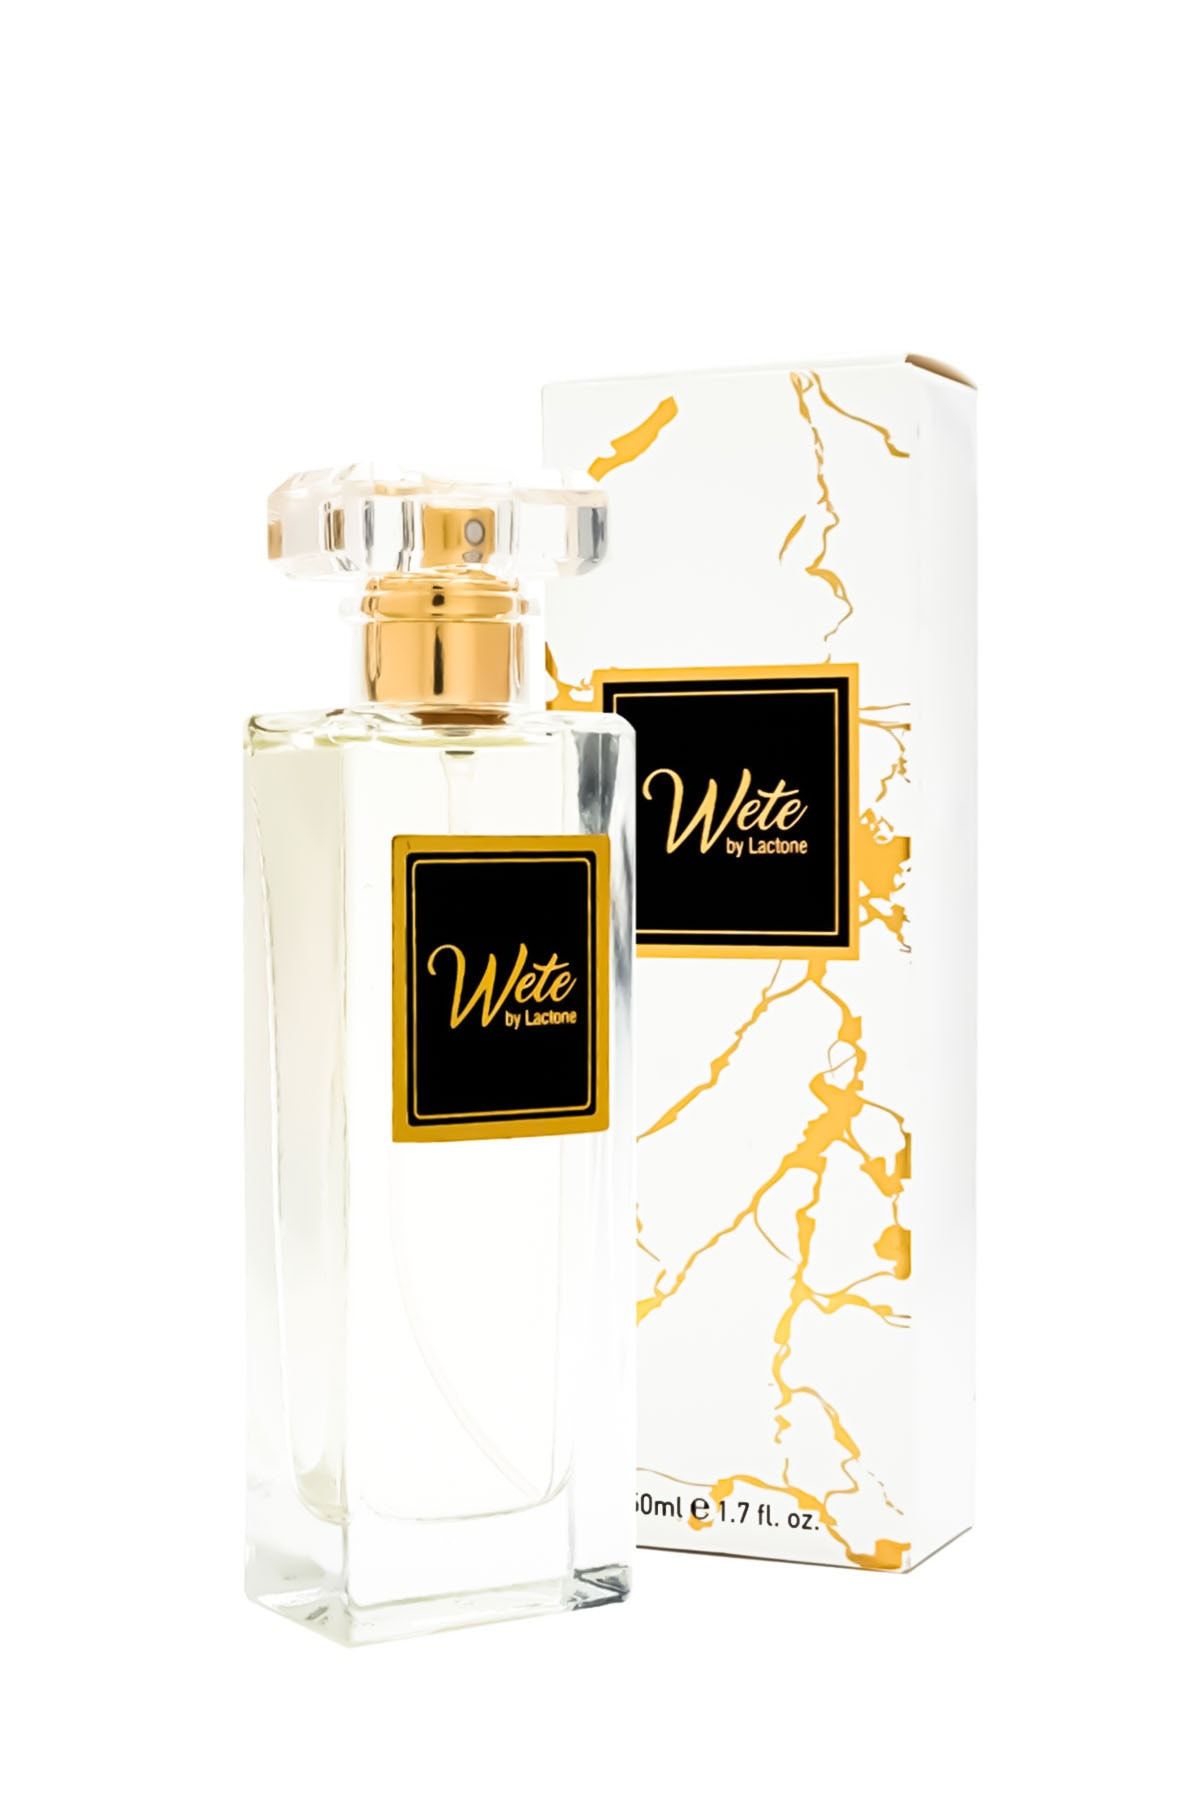 L'ACTONE Wete Kadın Cocos Parfümü Wl-224 50 ml